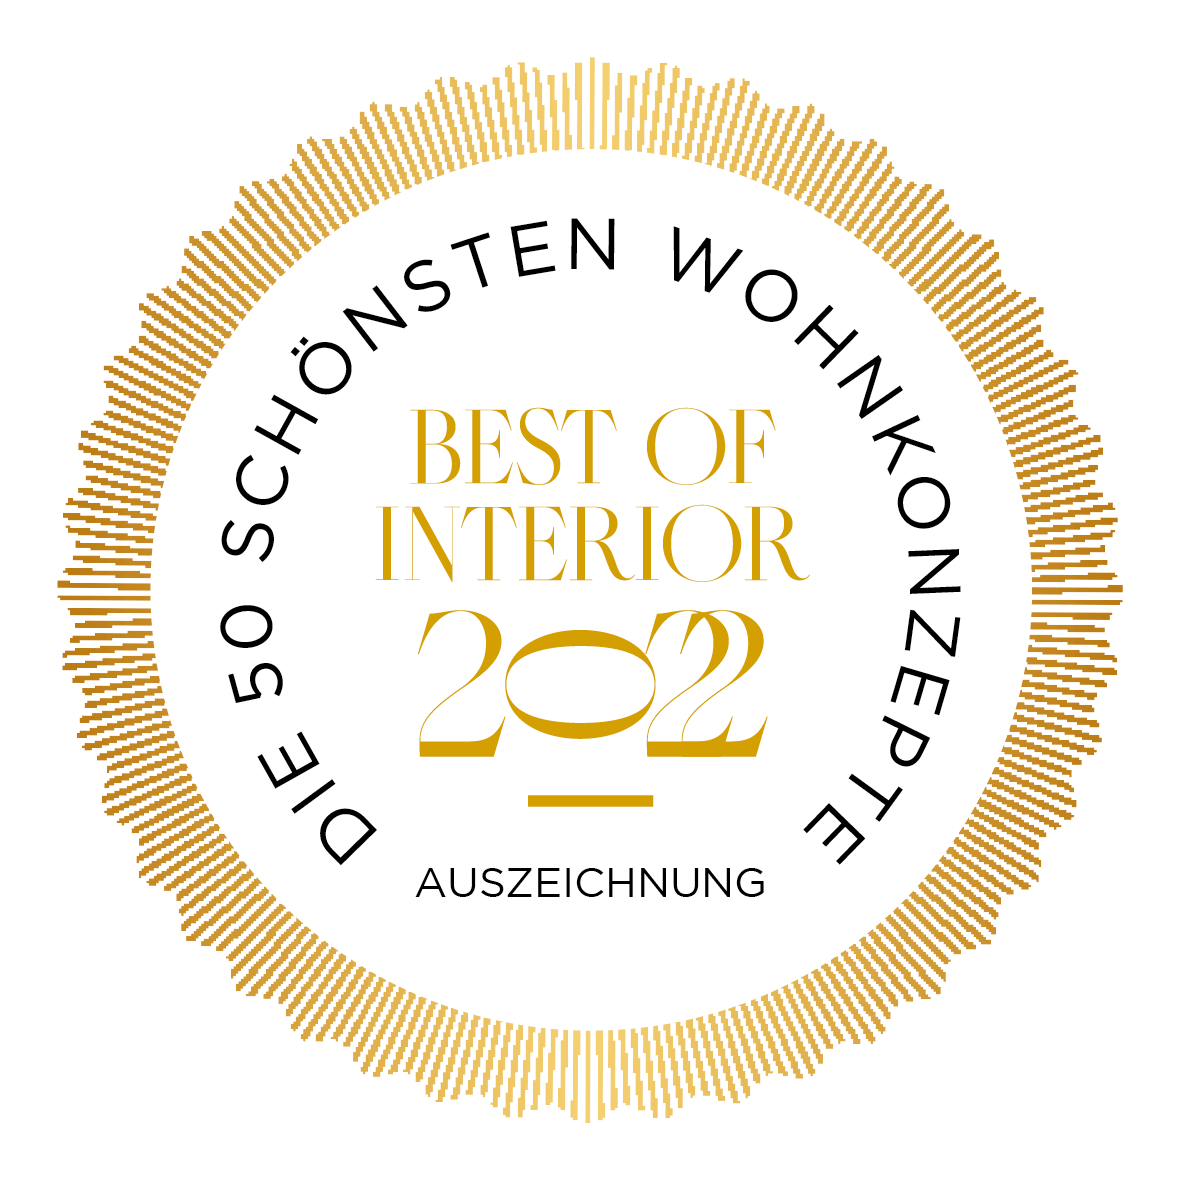 Best of Interior Award 2022